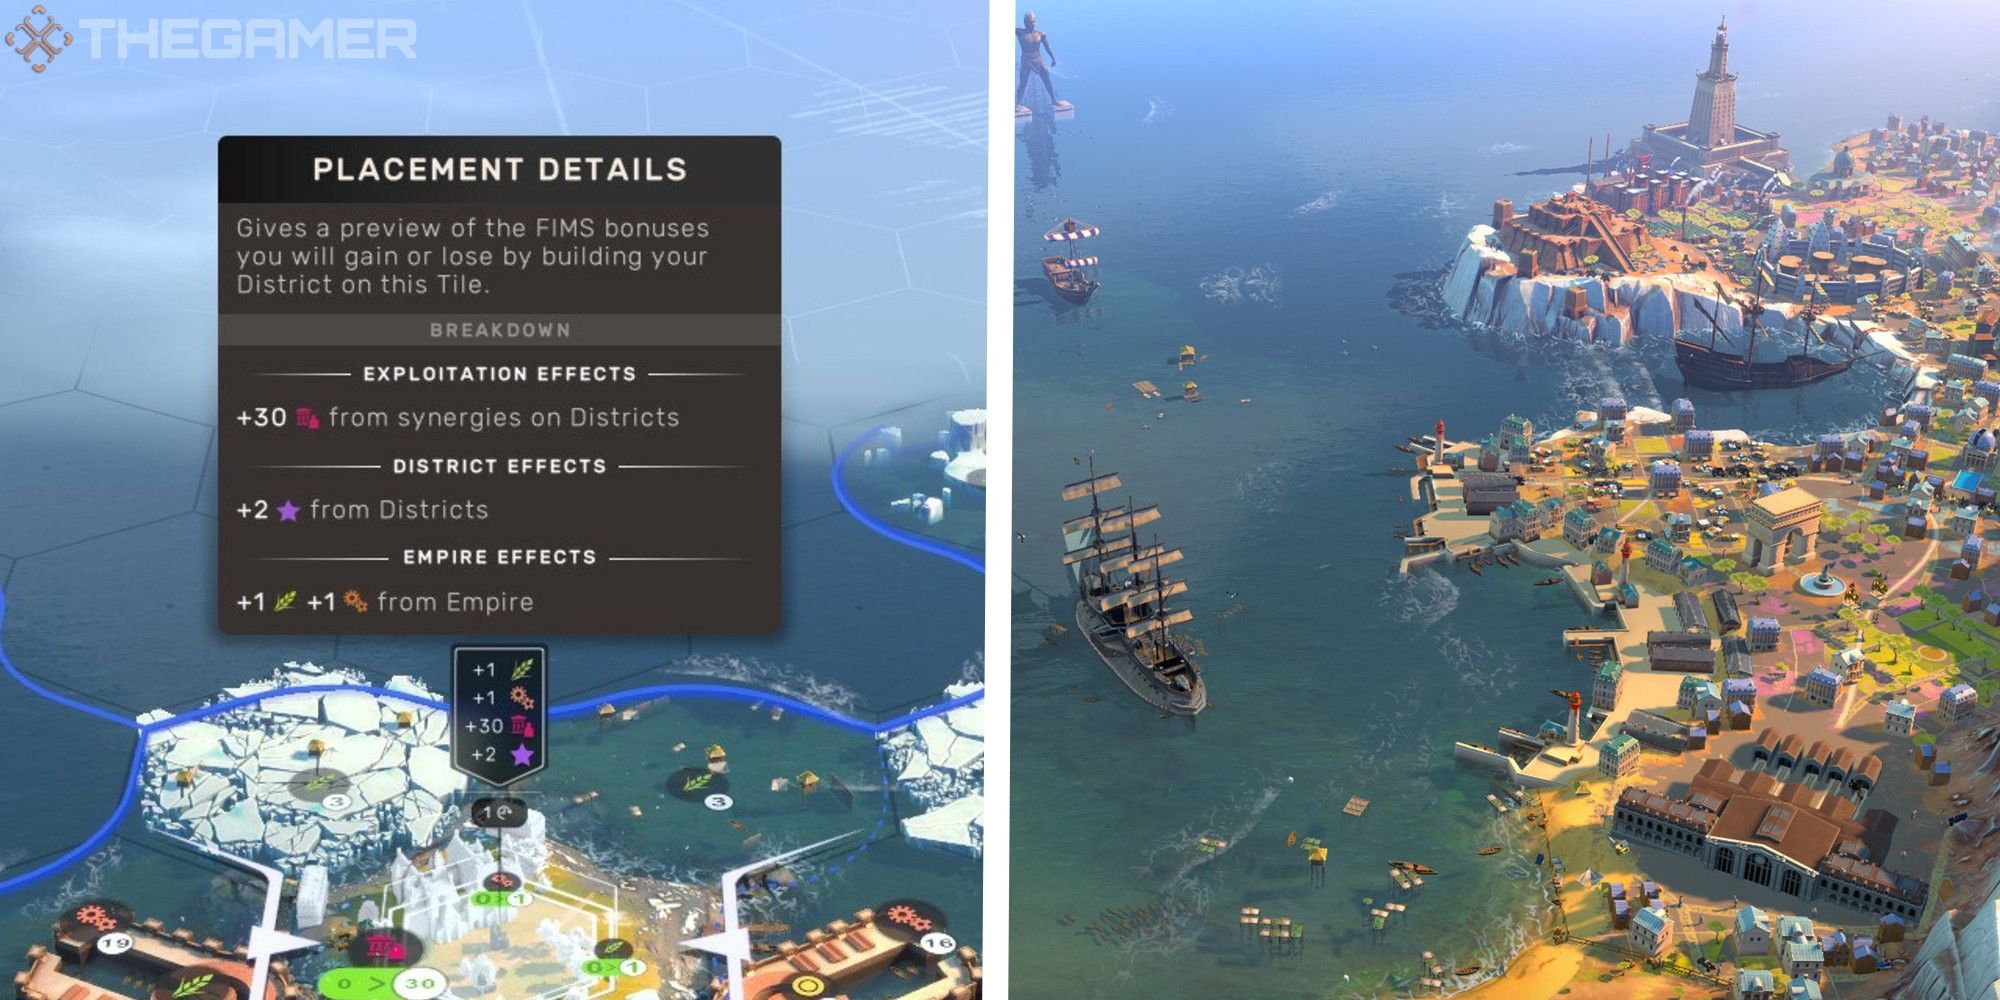 image of stability panel next to image of coastal city